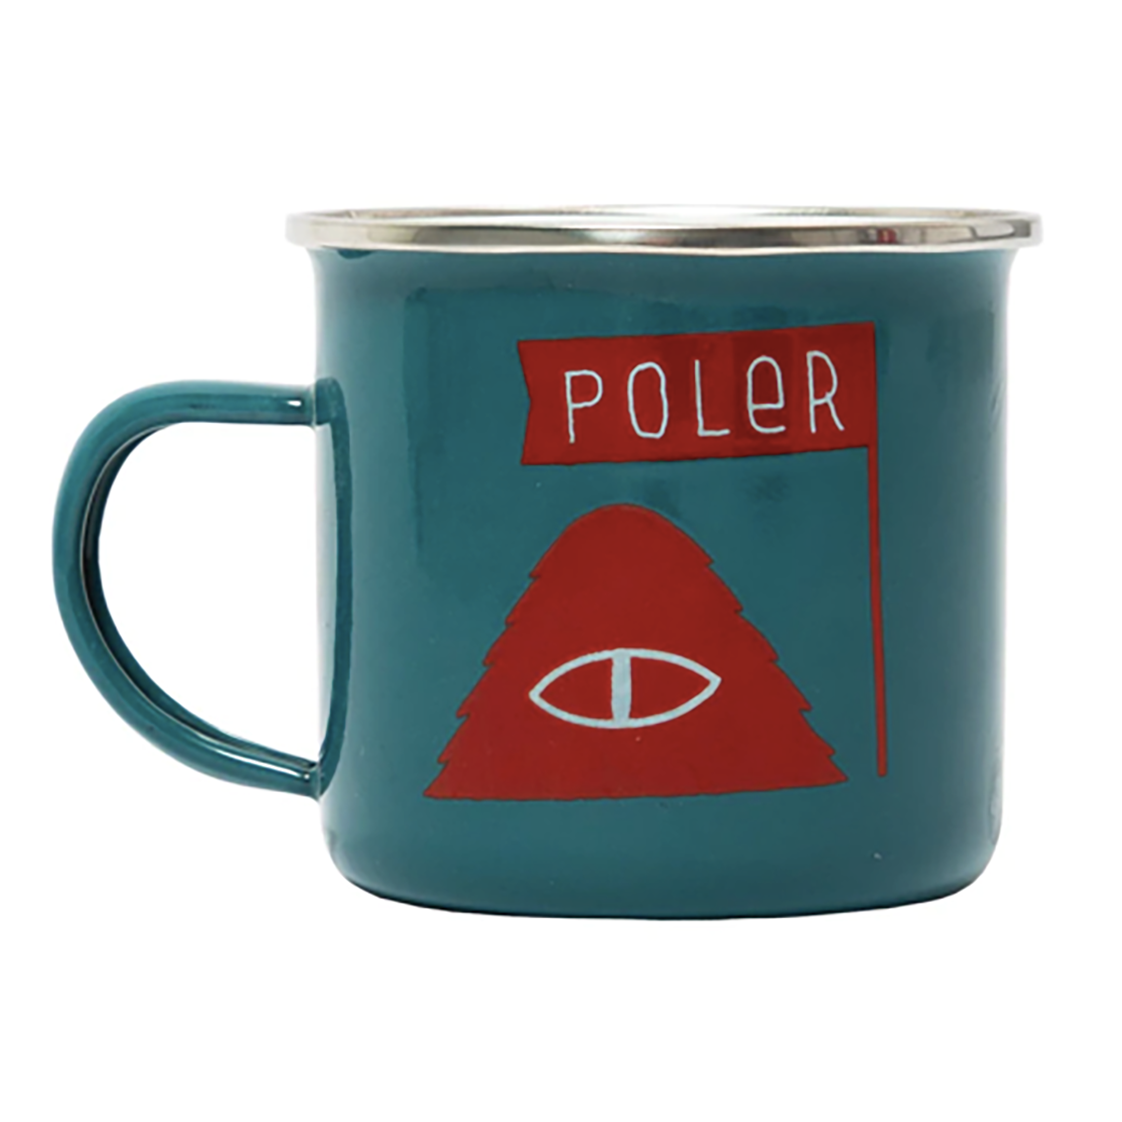 Poler Camp Mug - Red Heart